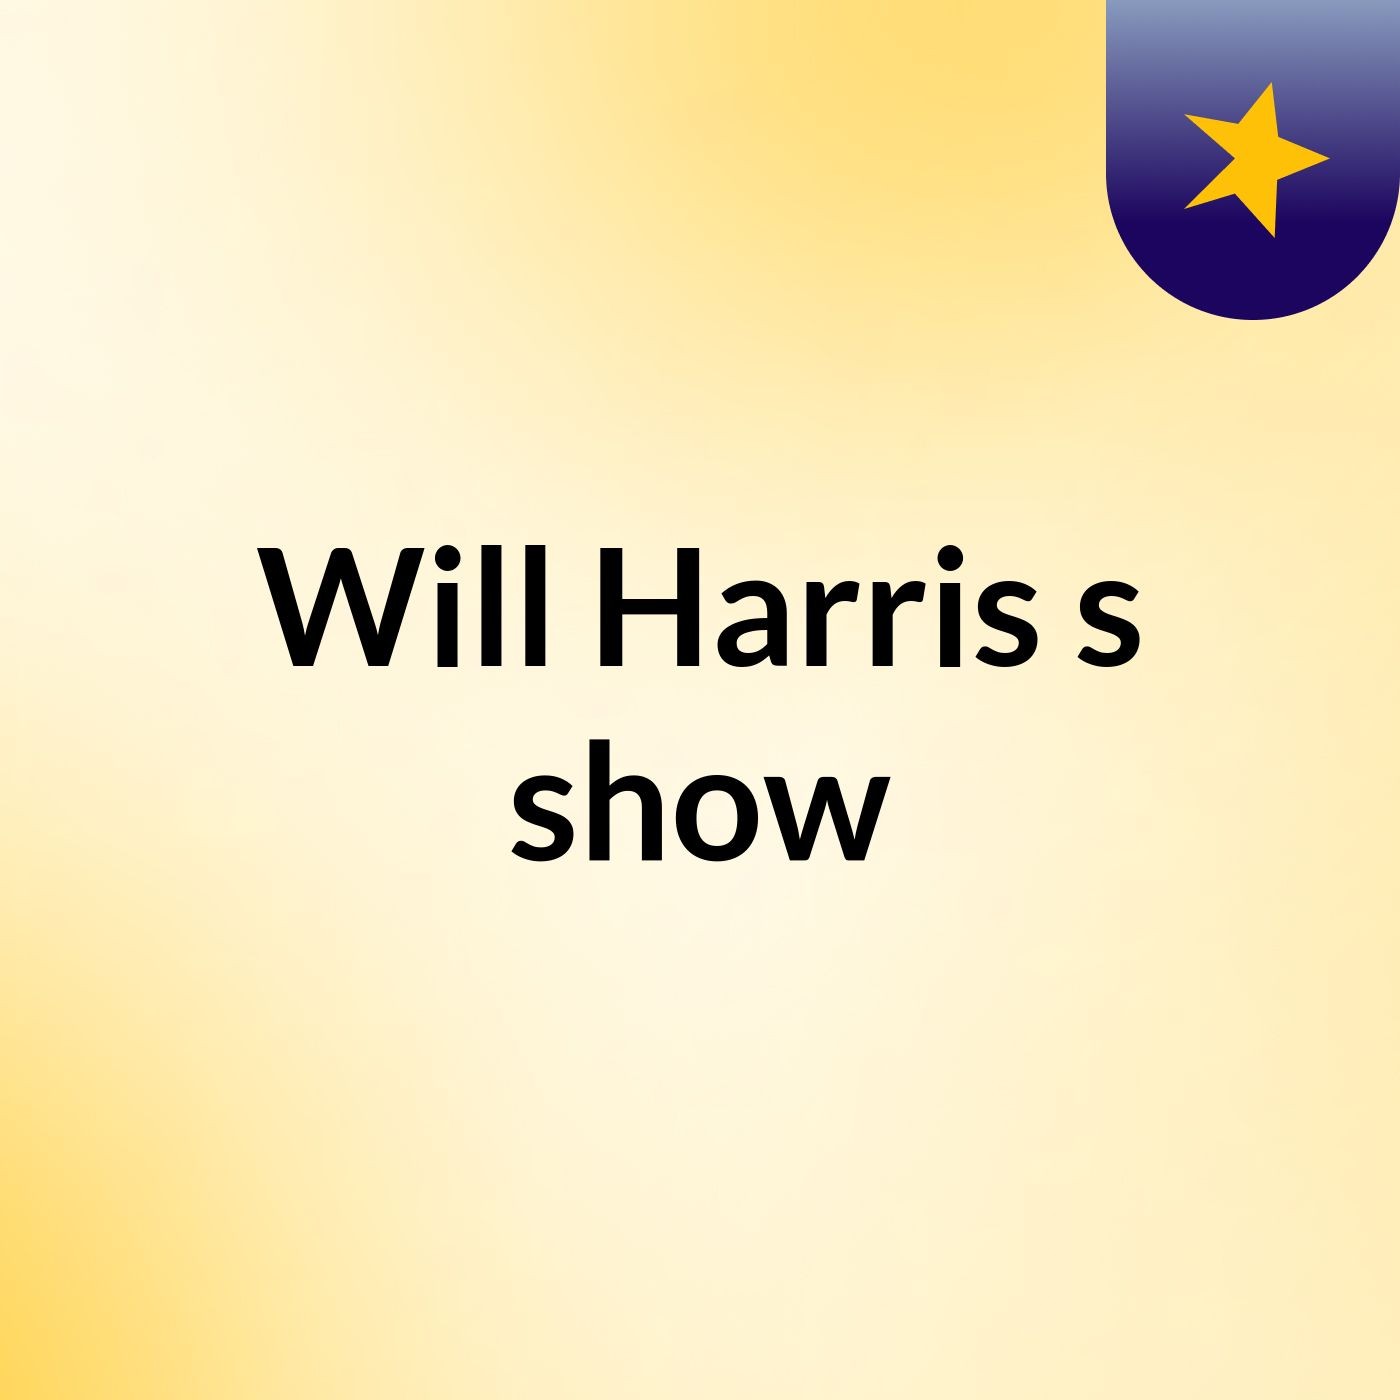 Will Harris's show